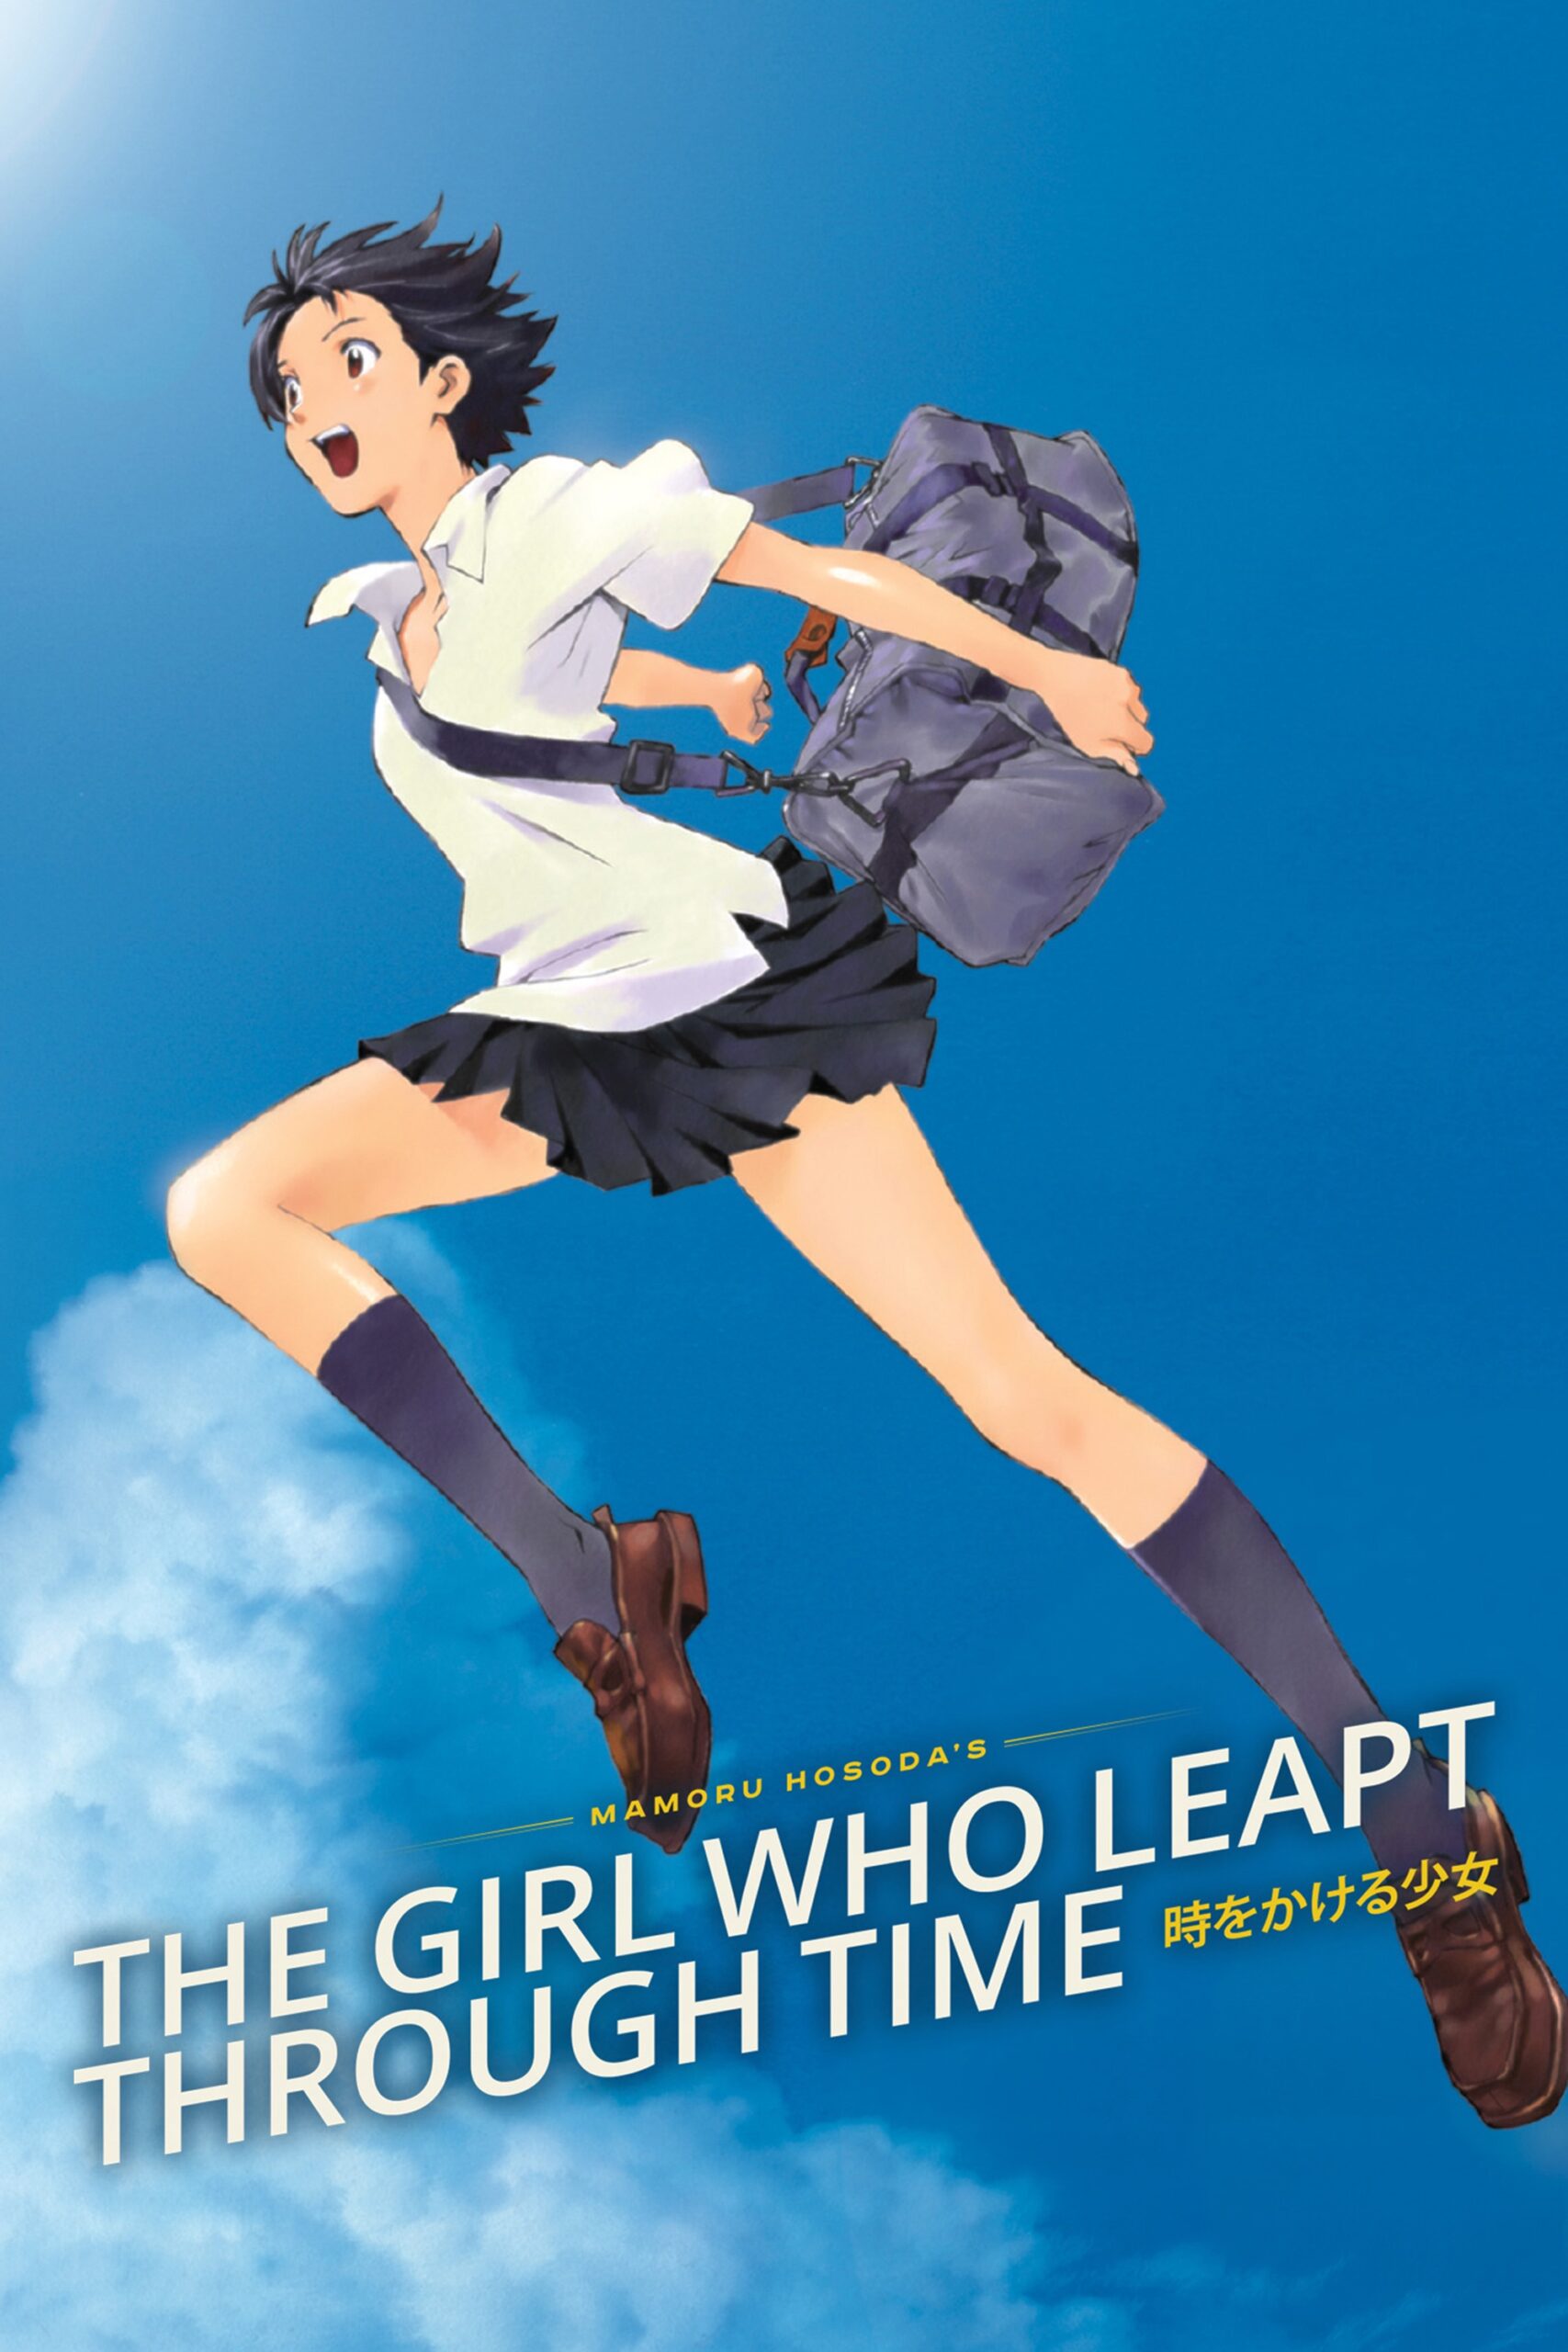 The Girl Who leap through Time